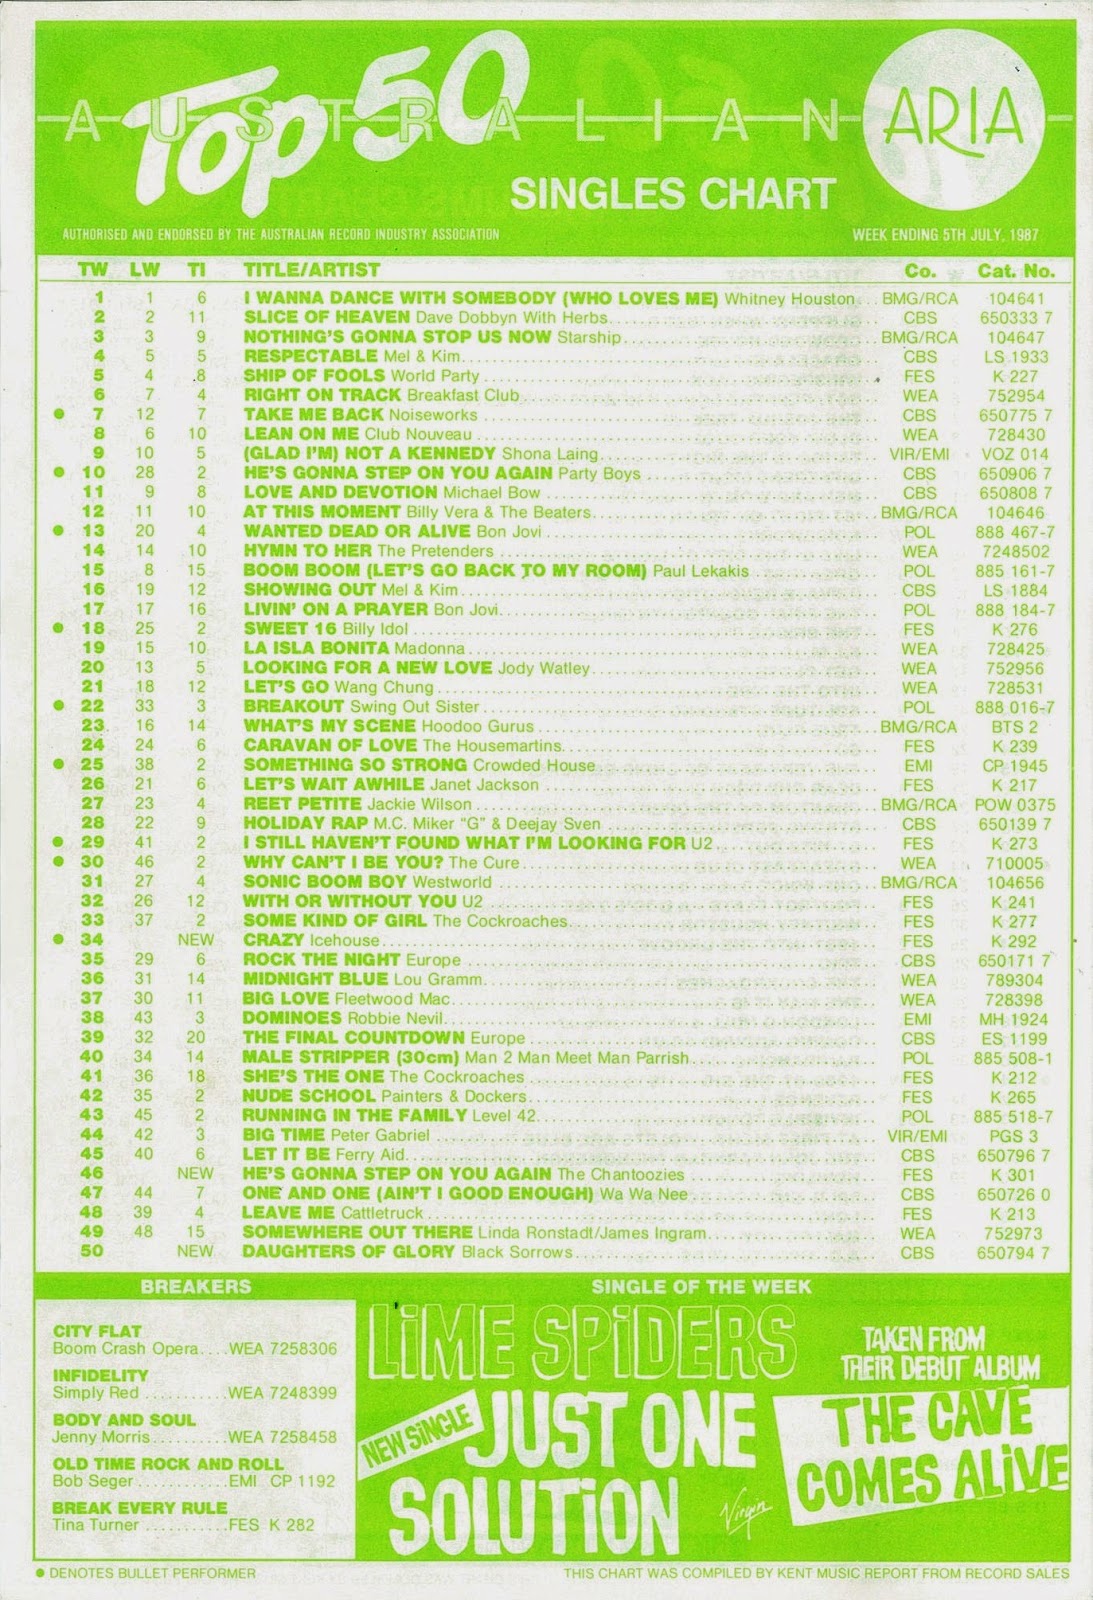 Australian Music Charts 1987